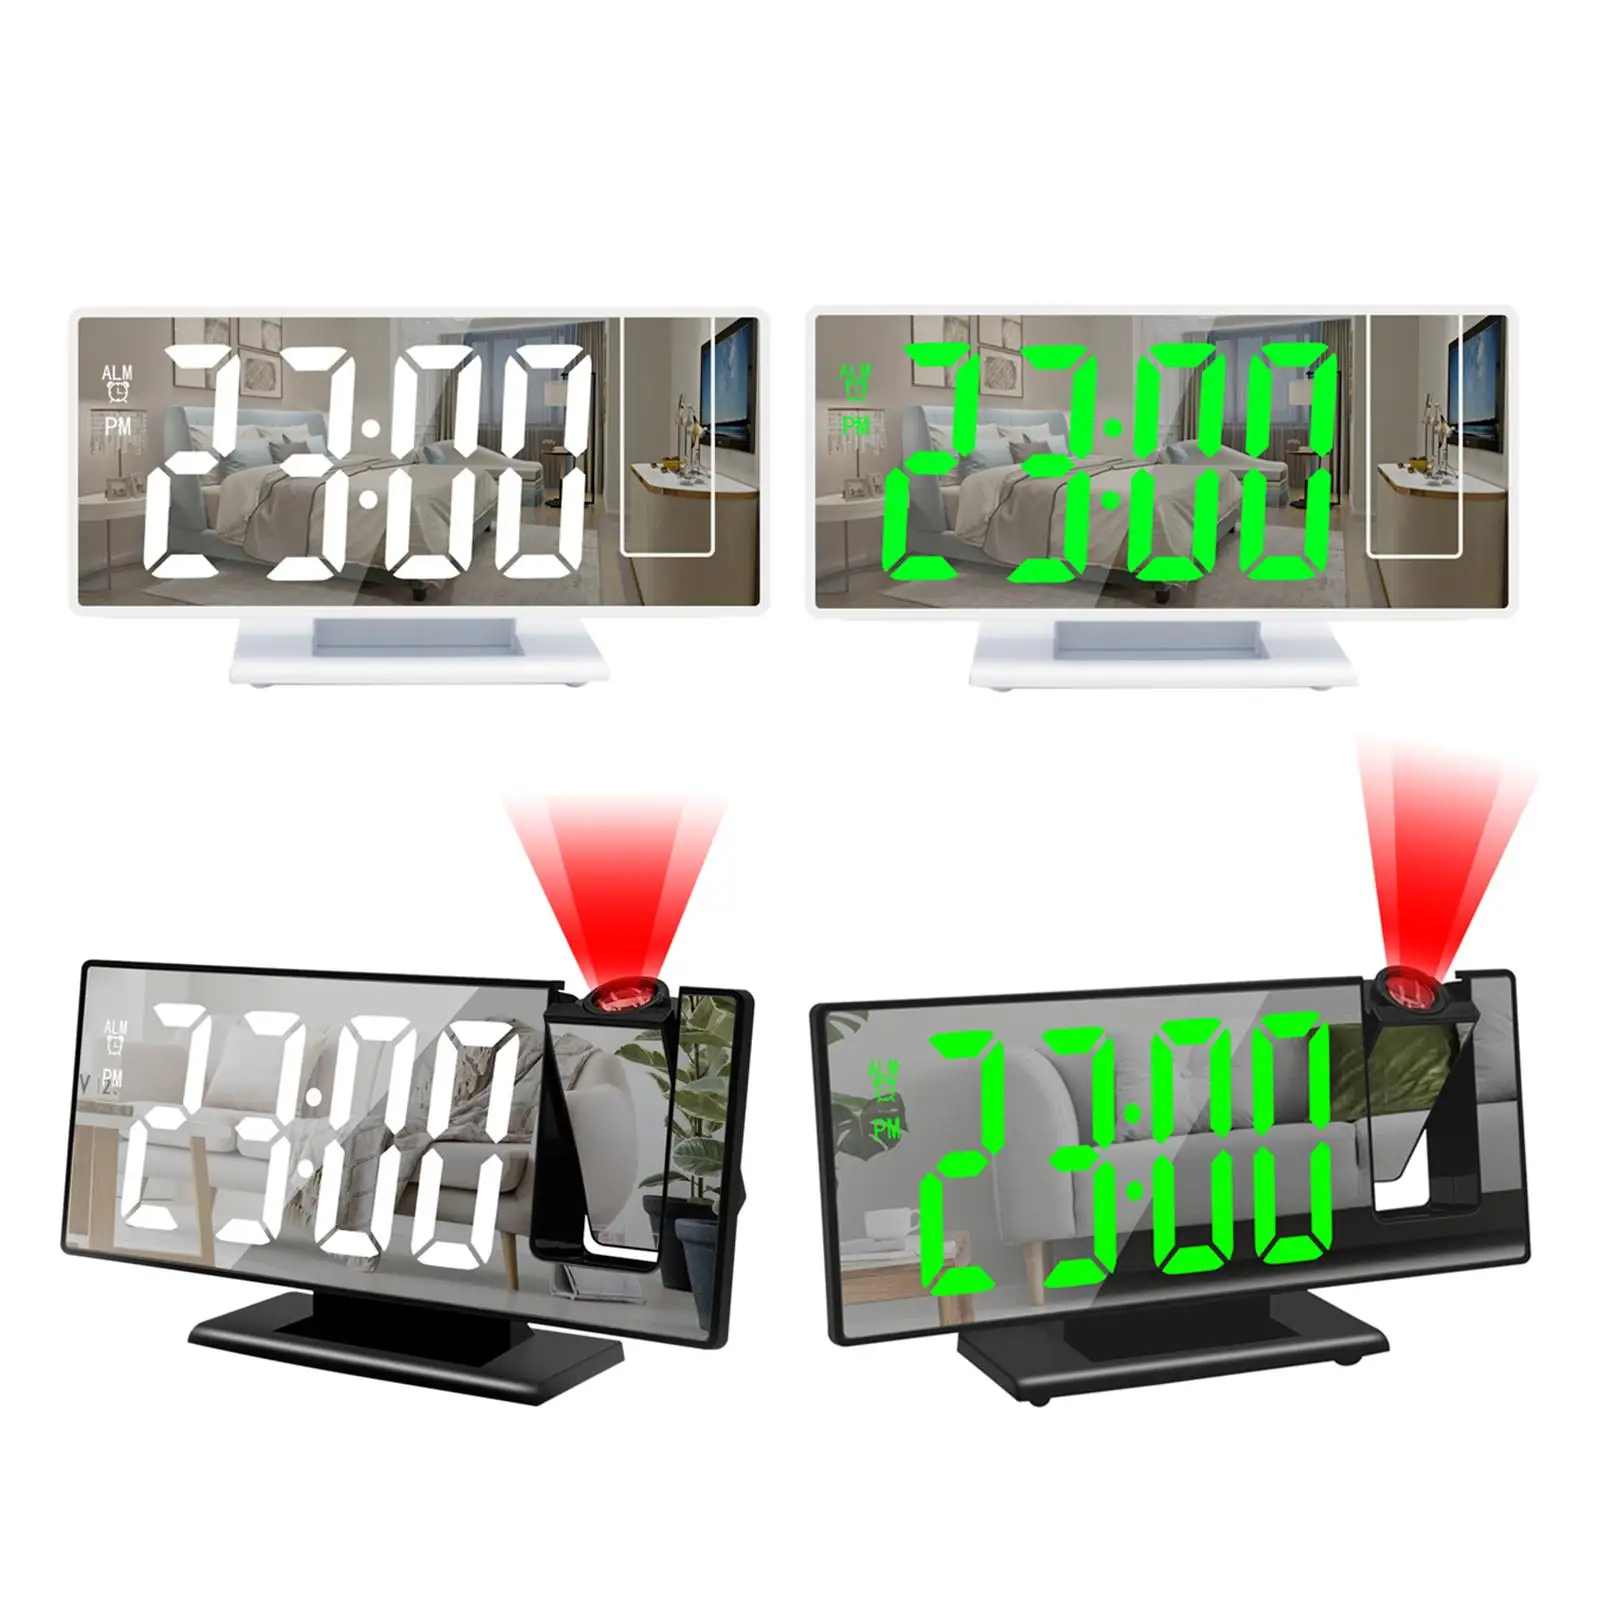 Projection Alarm Clock Rechargeable Display Temperature Mirror Clock, 12/24H Digital Clocks, for Ceiling Bedroom Living Room,